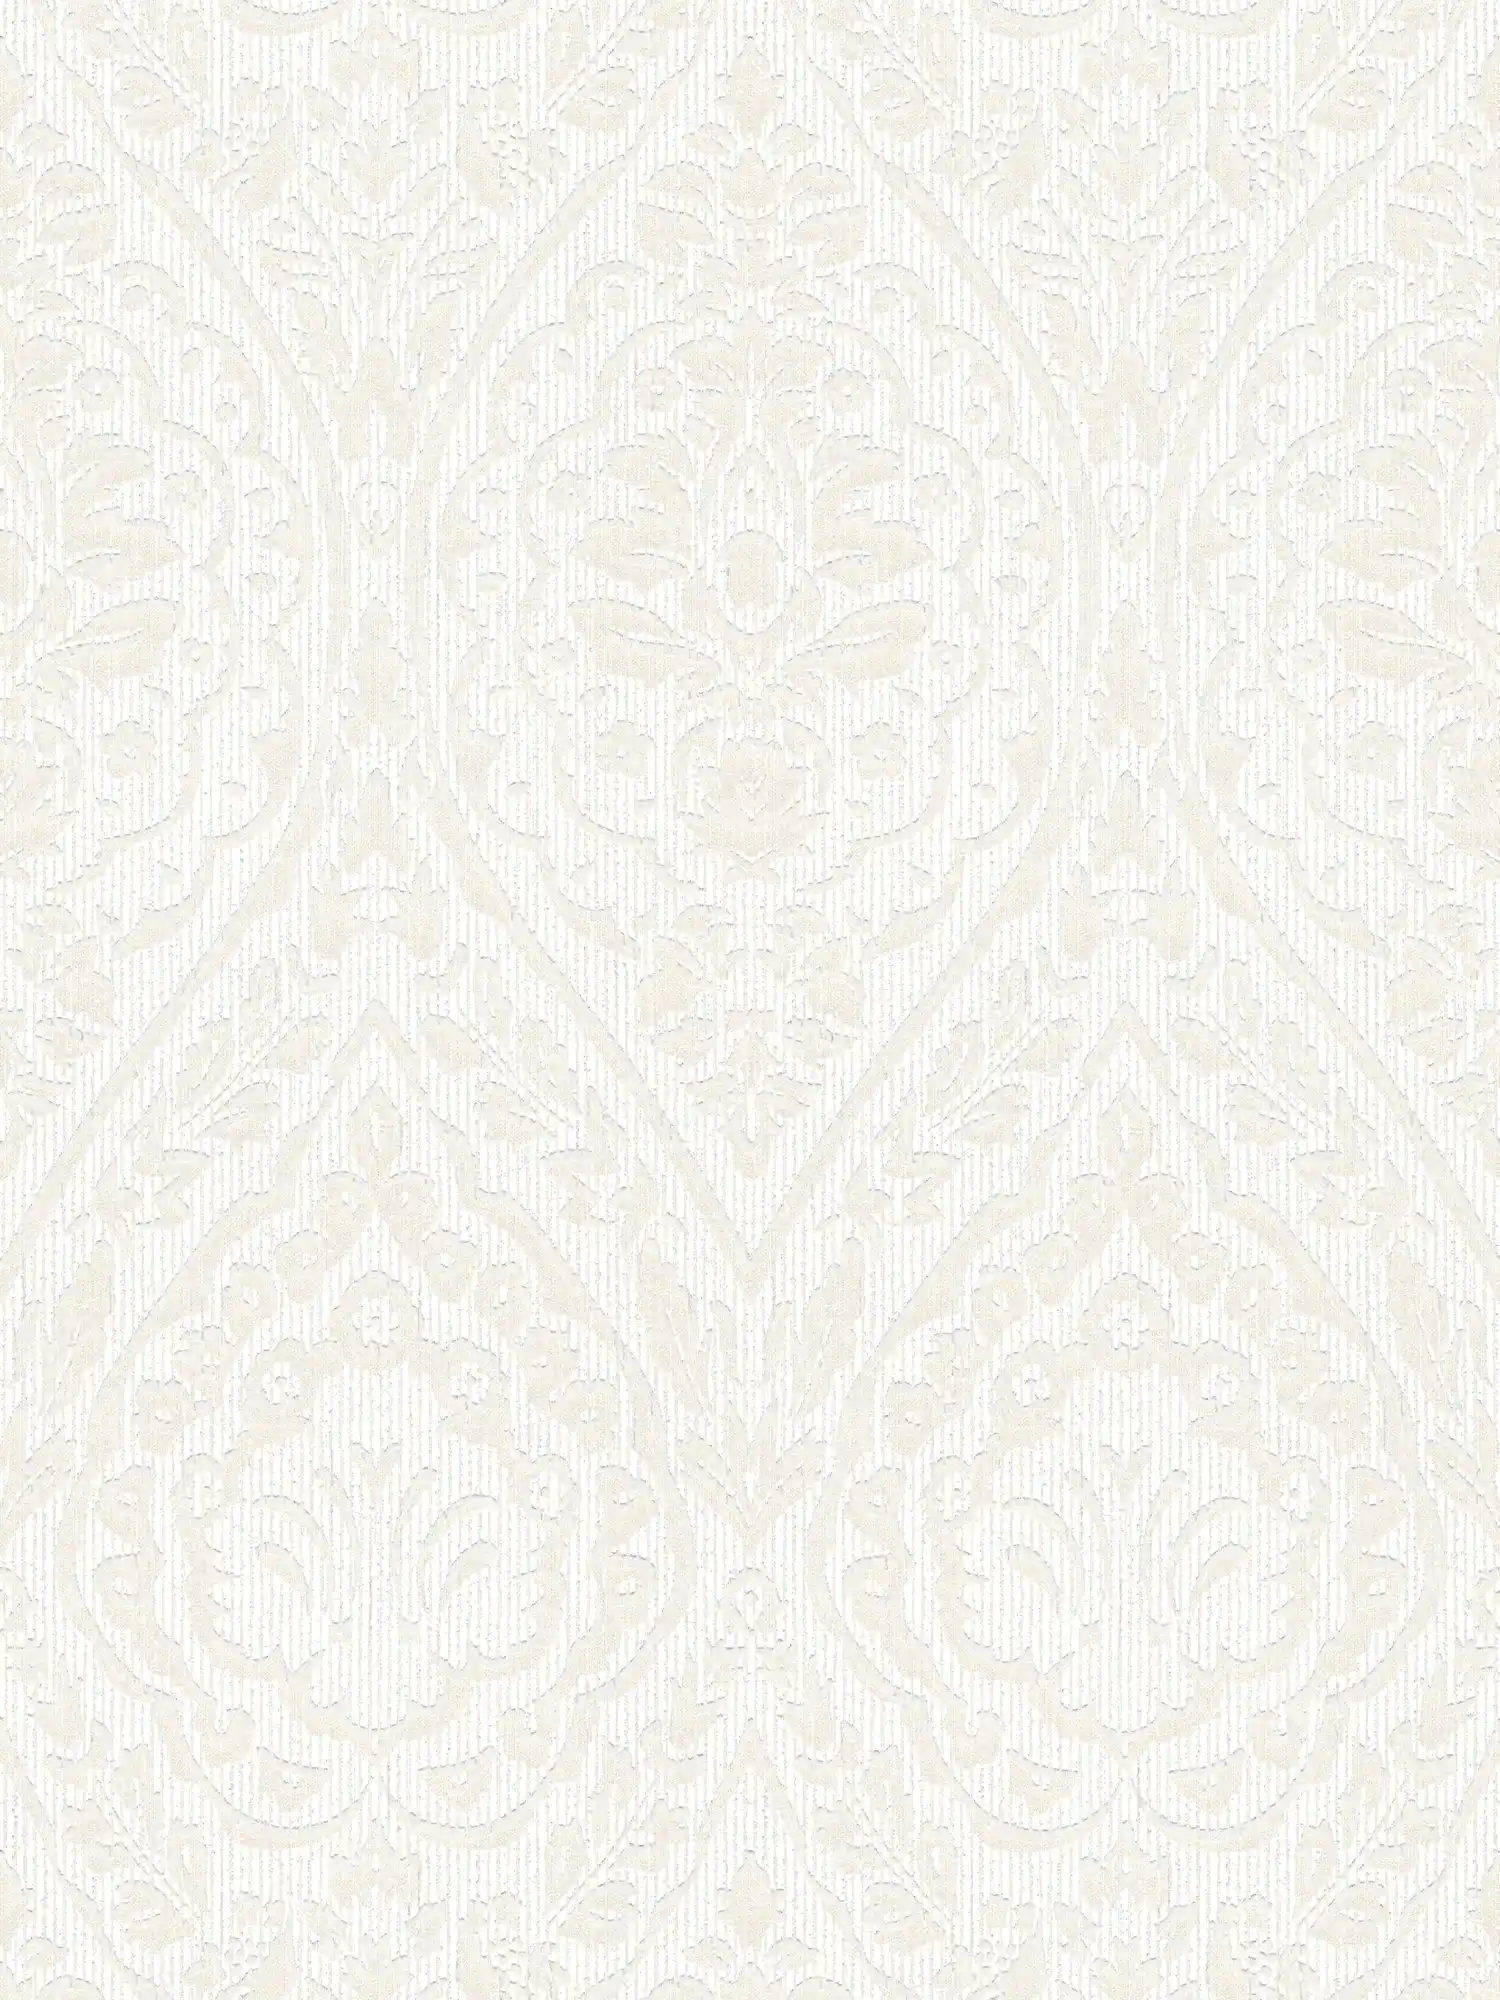         Strukturtapete mit floralem Ornamentmuster im Kolonial Stil – Weiß
    